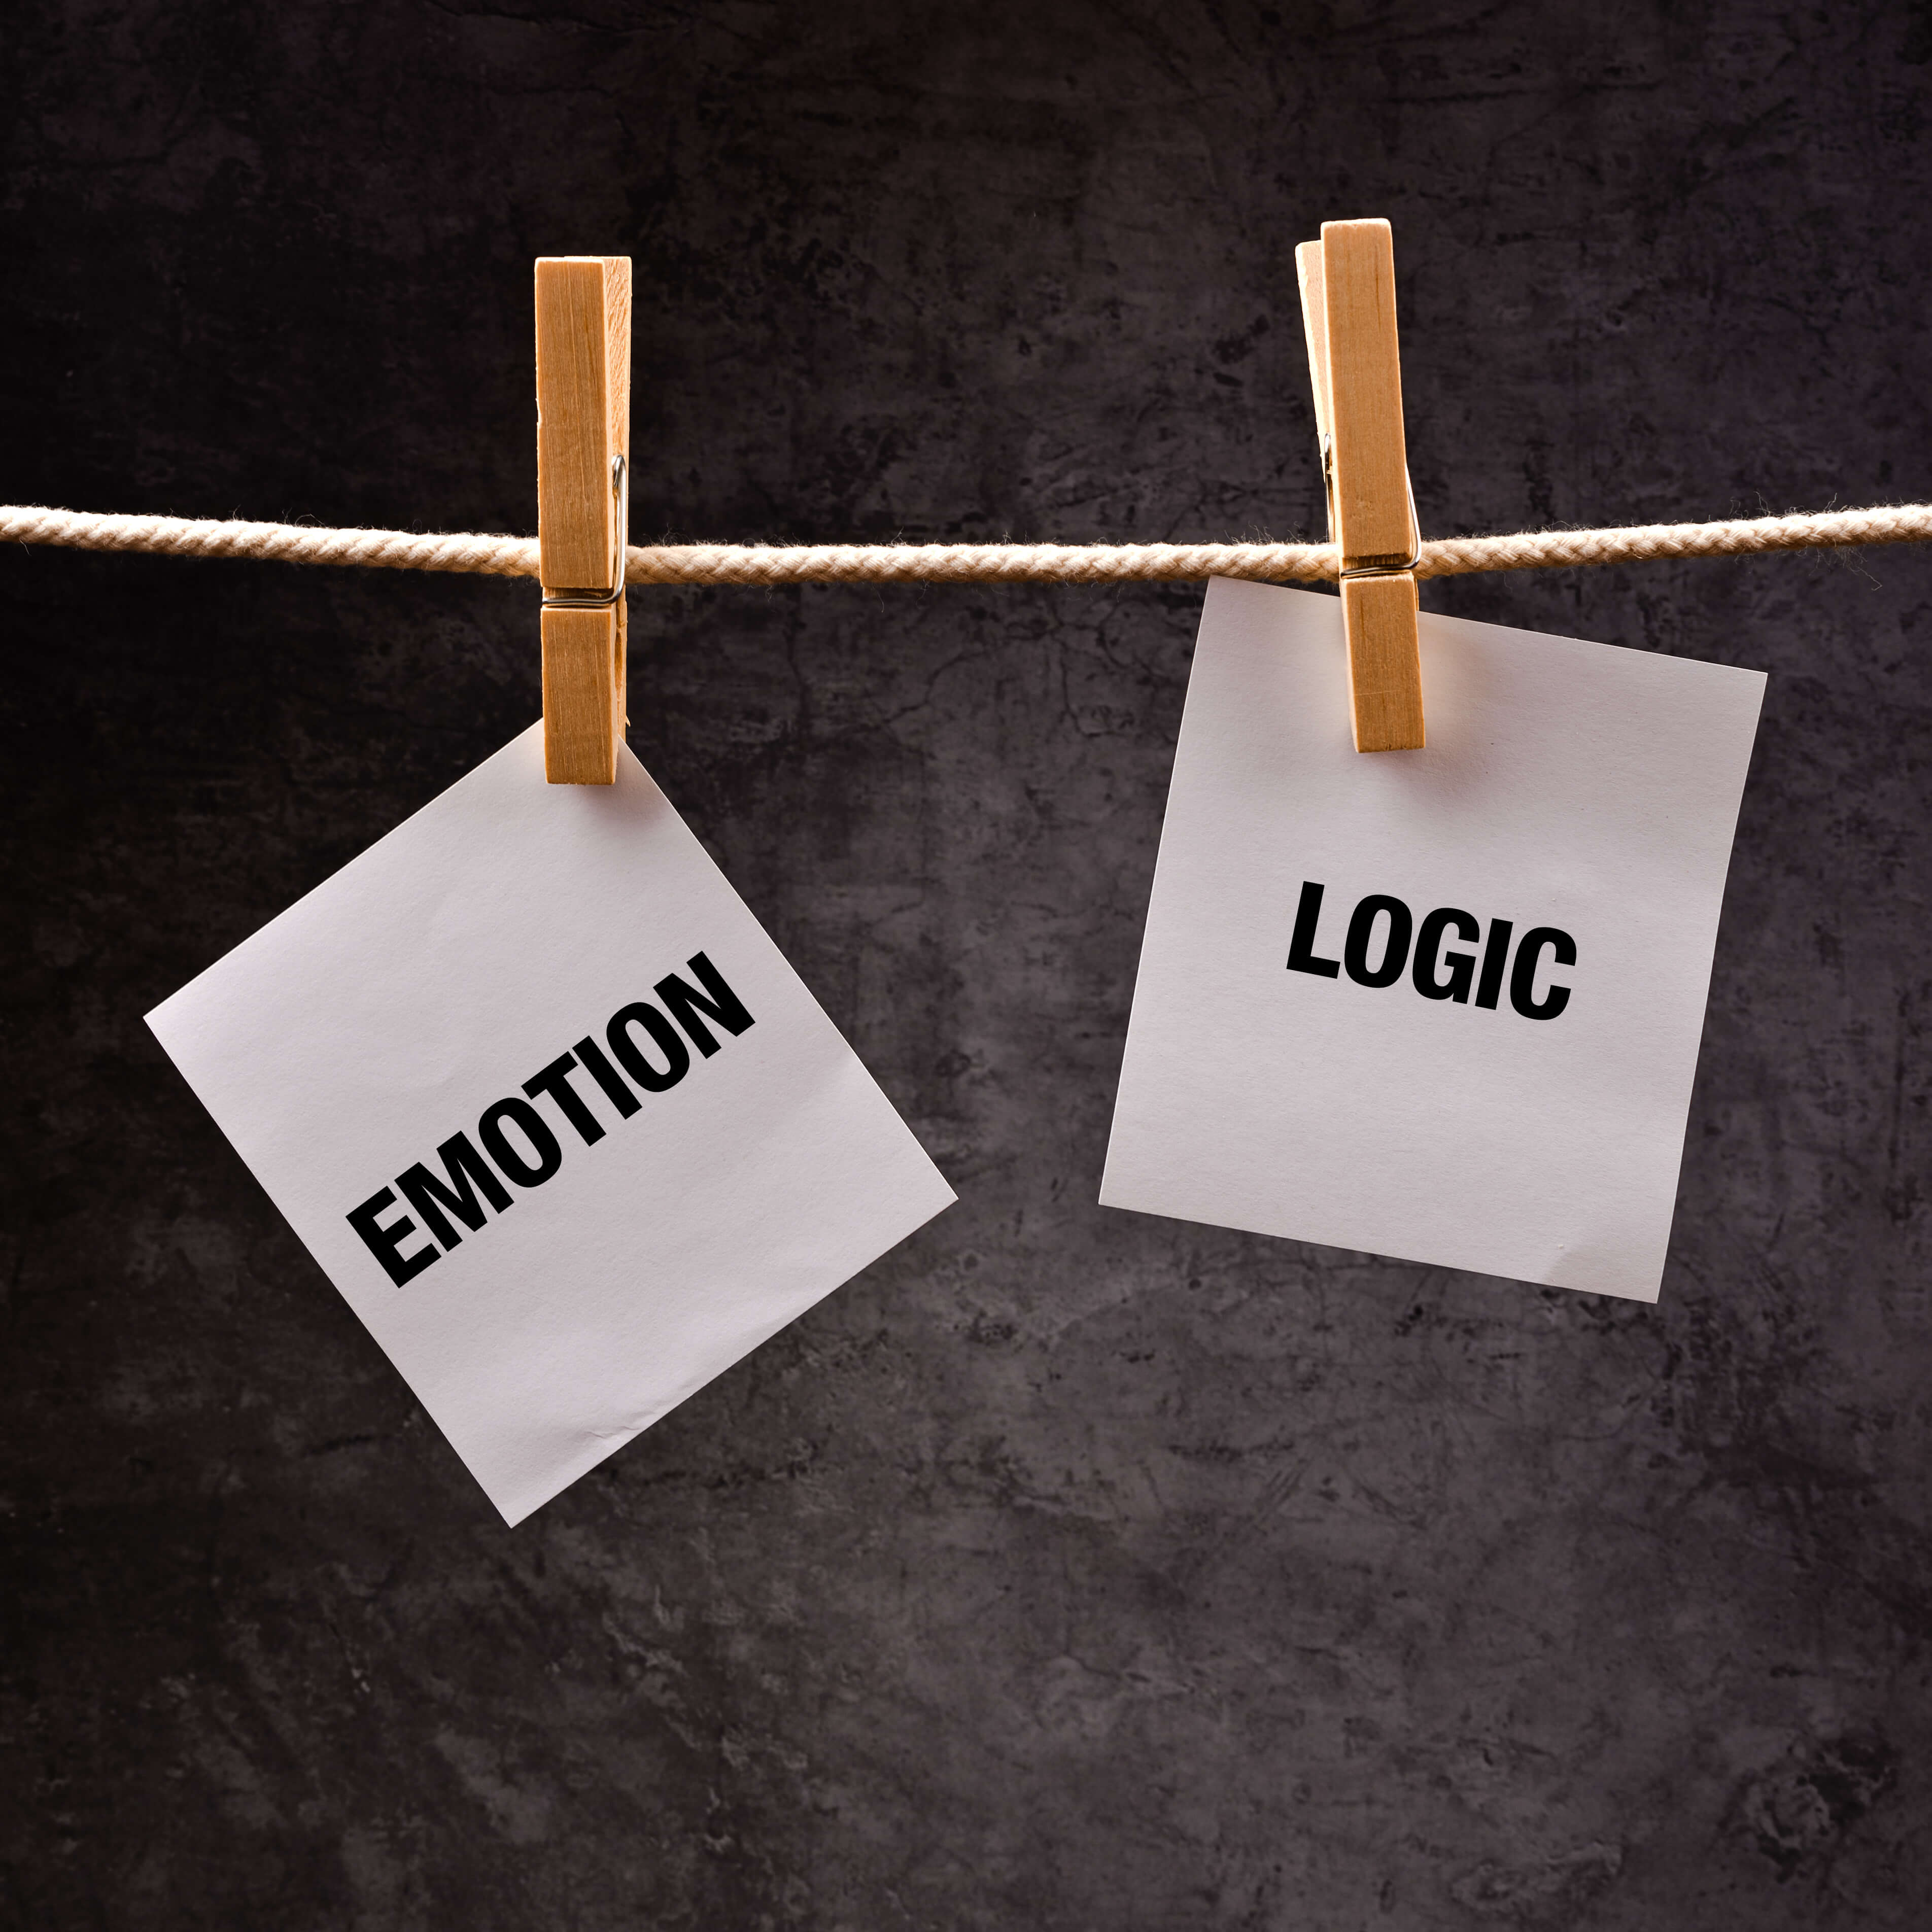 emotion vs logic